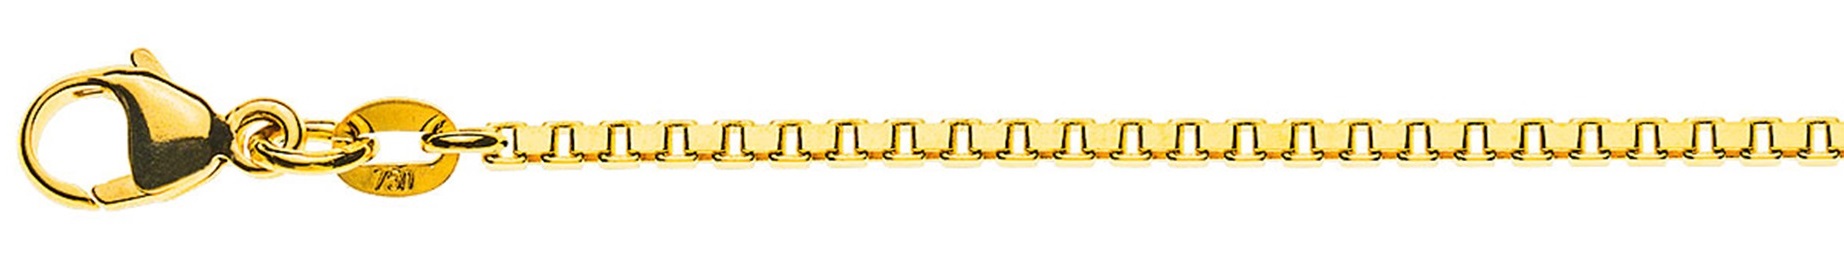 AURONOS Prestige Necklace yellow gold 18K Venetian chain diamond 55cm 1.6mm